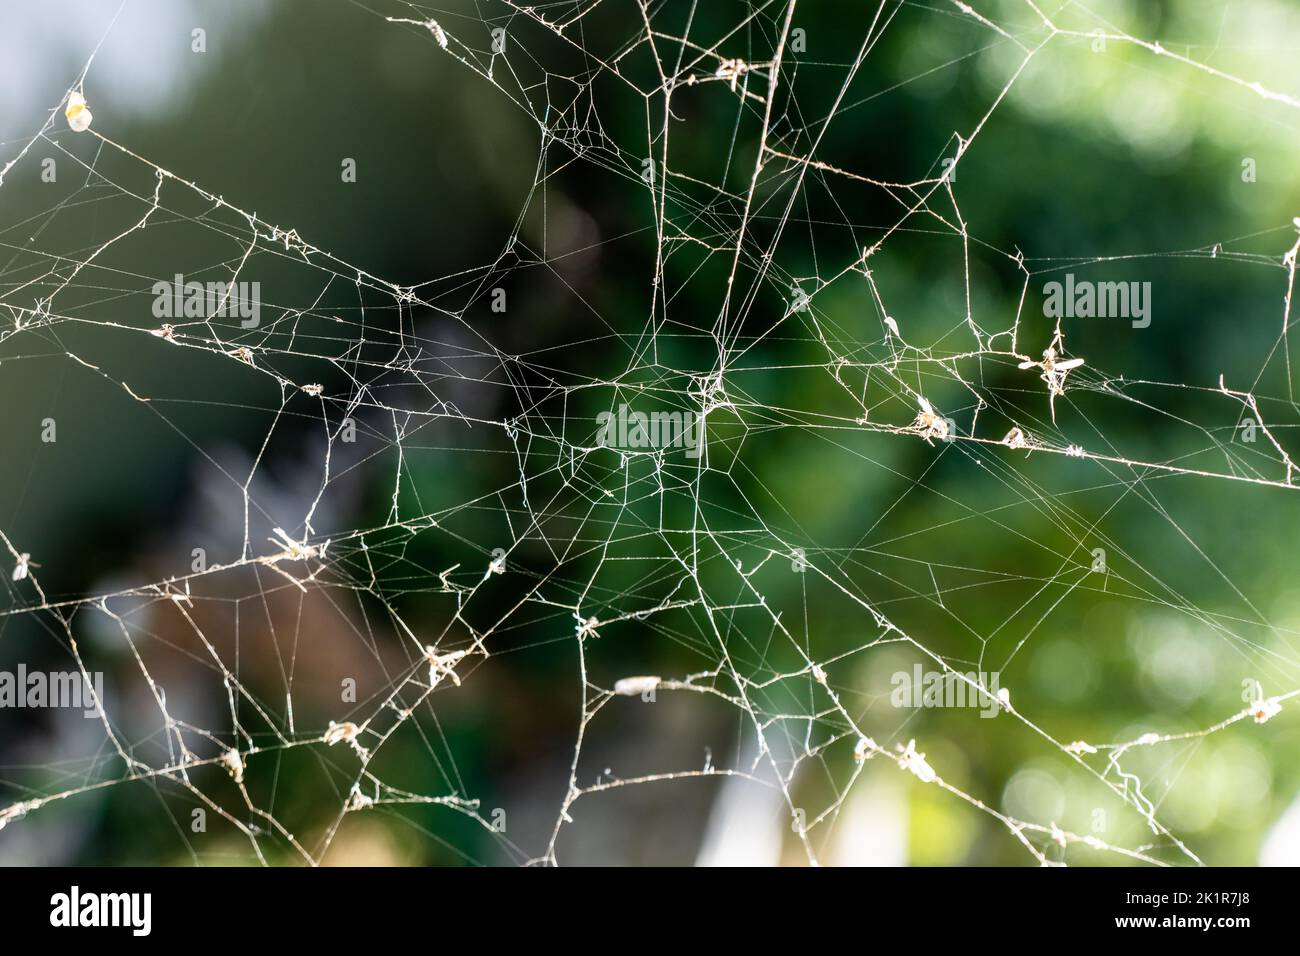 Una tela de araña sedosa frente a una vista borrosa del bosque lluvioso. Concepto de naturaleza hermosa. Foto de alta calidad Foto de stock